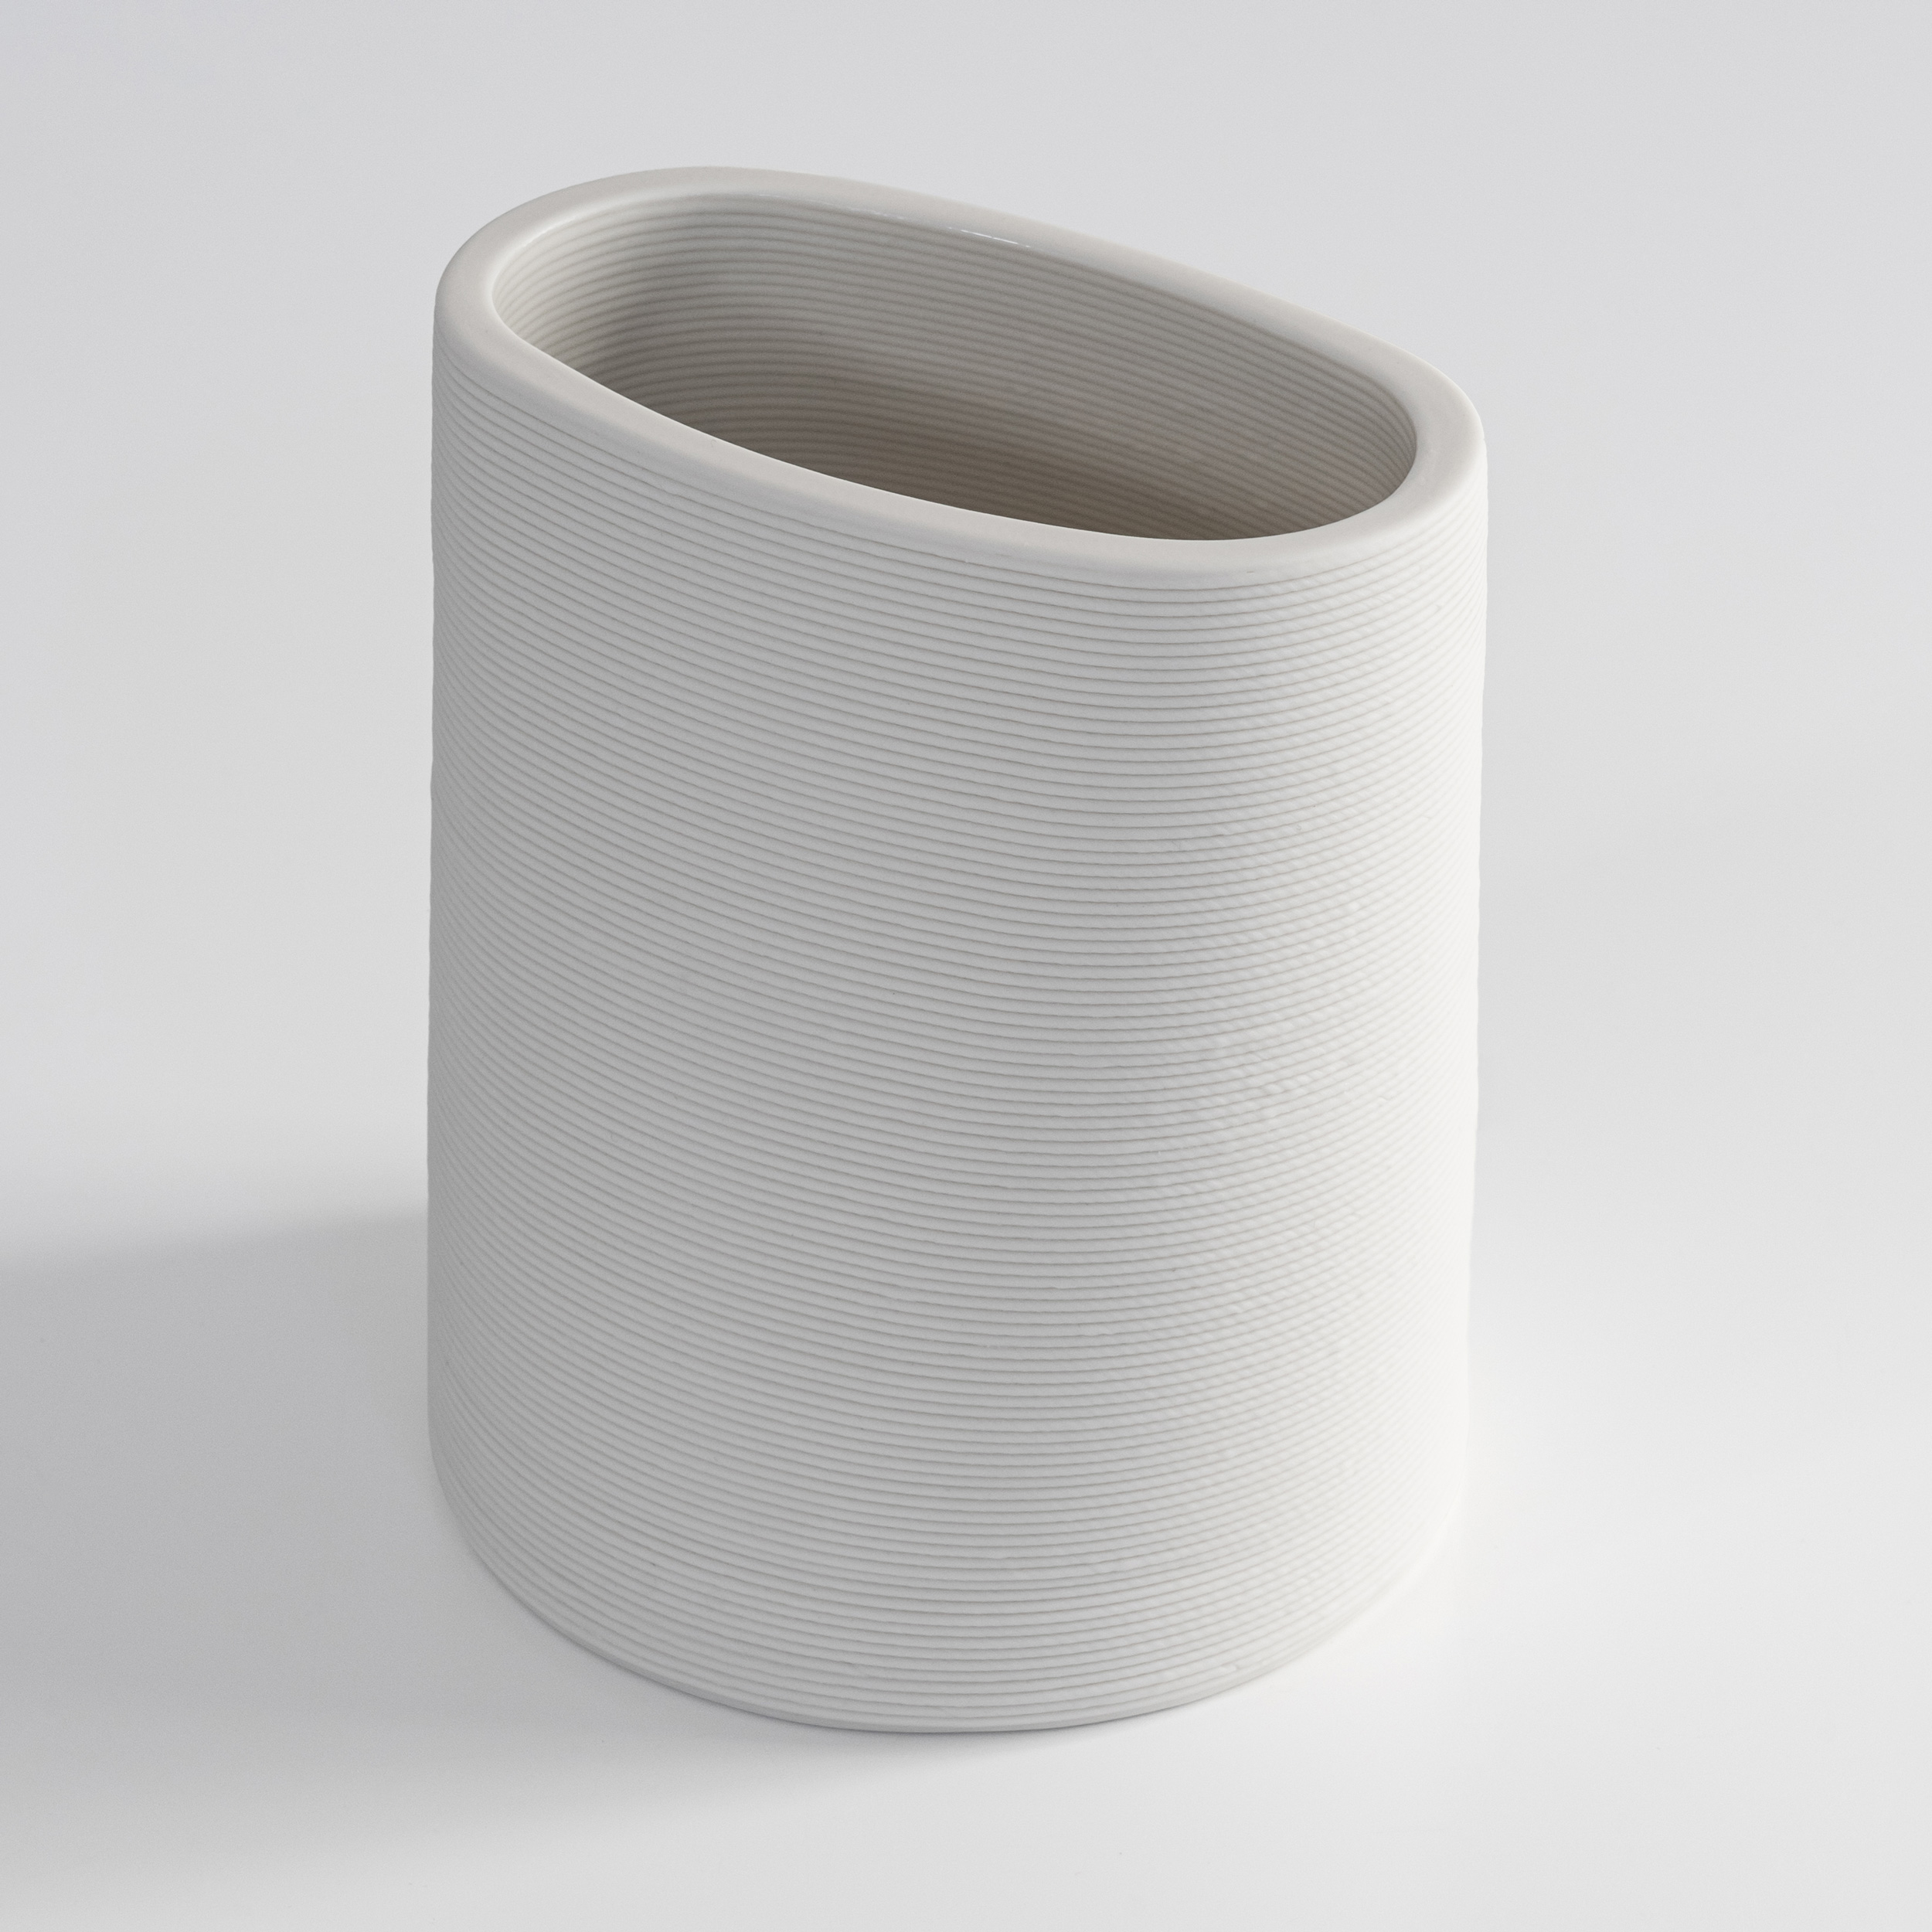 Vases_fluted-white-crop_web